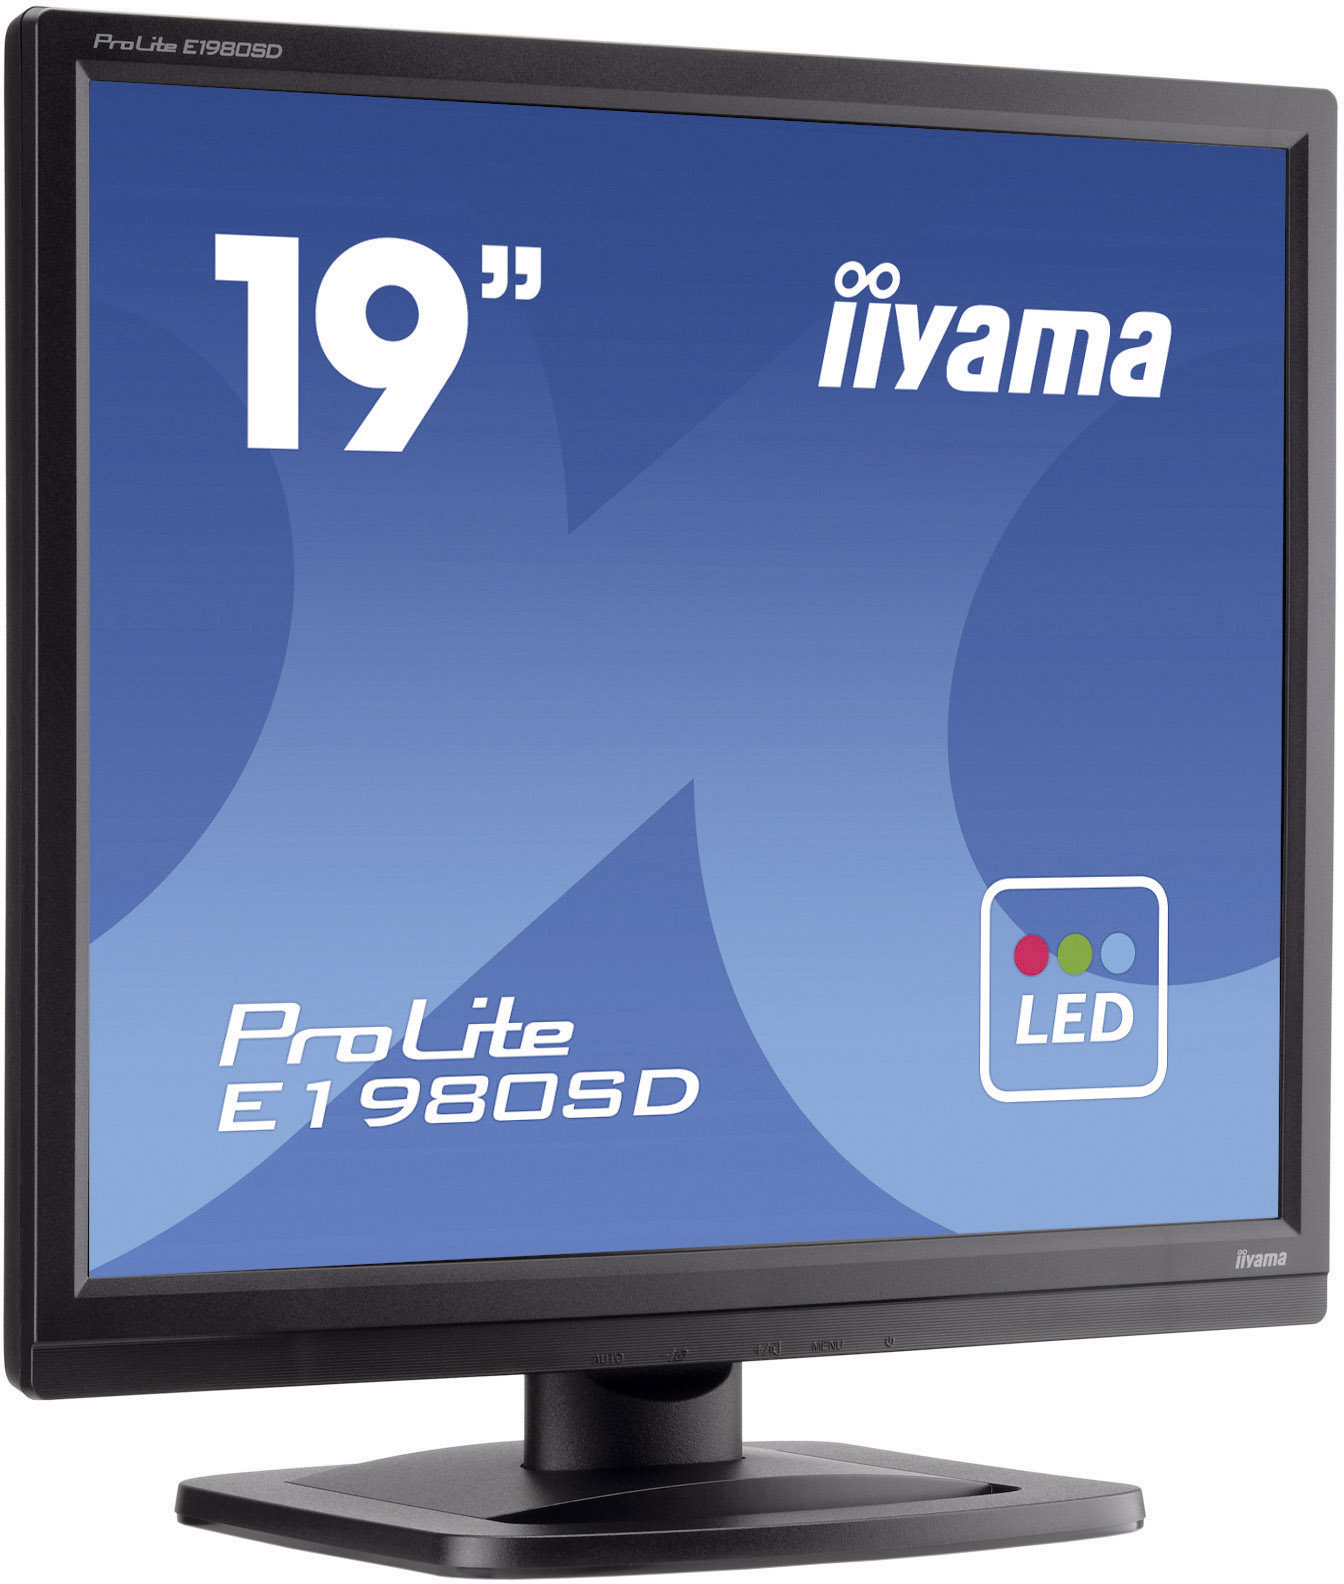 Iiyama E1980SD-B1 LED-Monitor EEK E (A - G) 48.3 cm (19 Zoll) 1280 x 1024 Pixel 5:4 5 ms DVI, VGA T